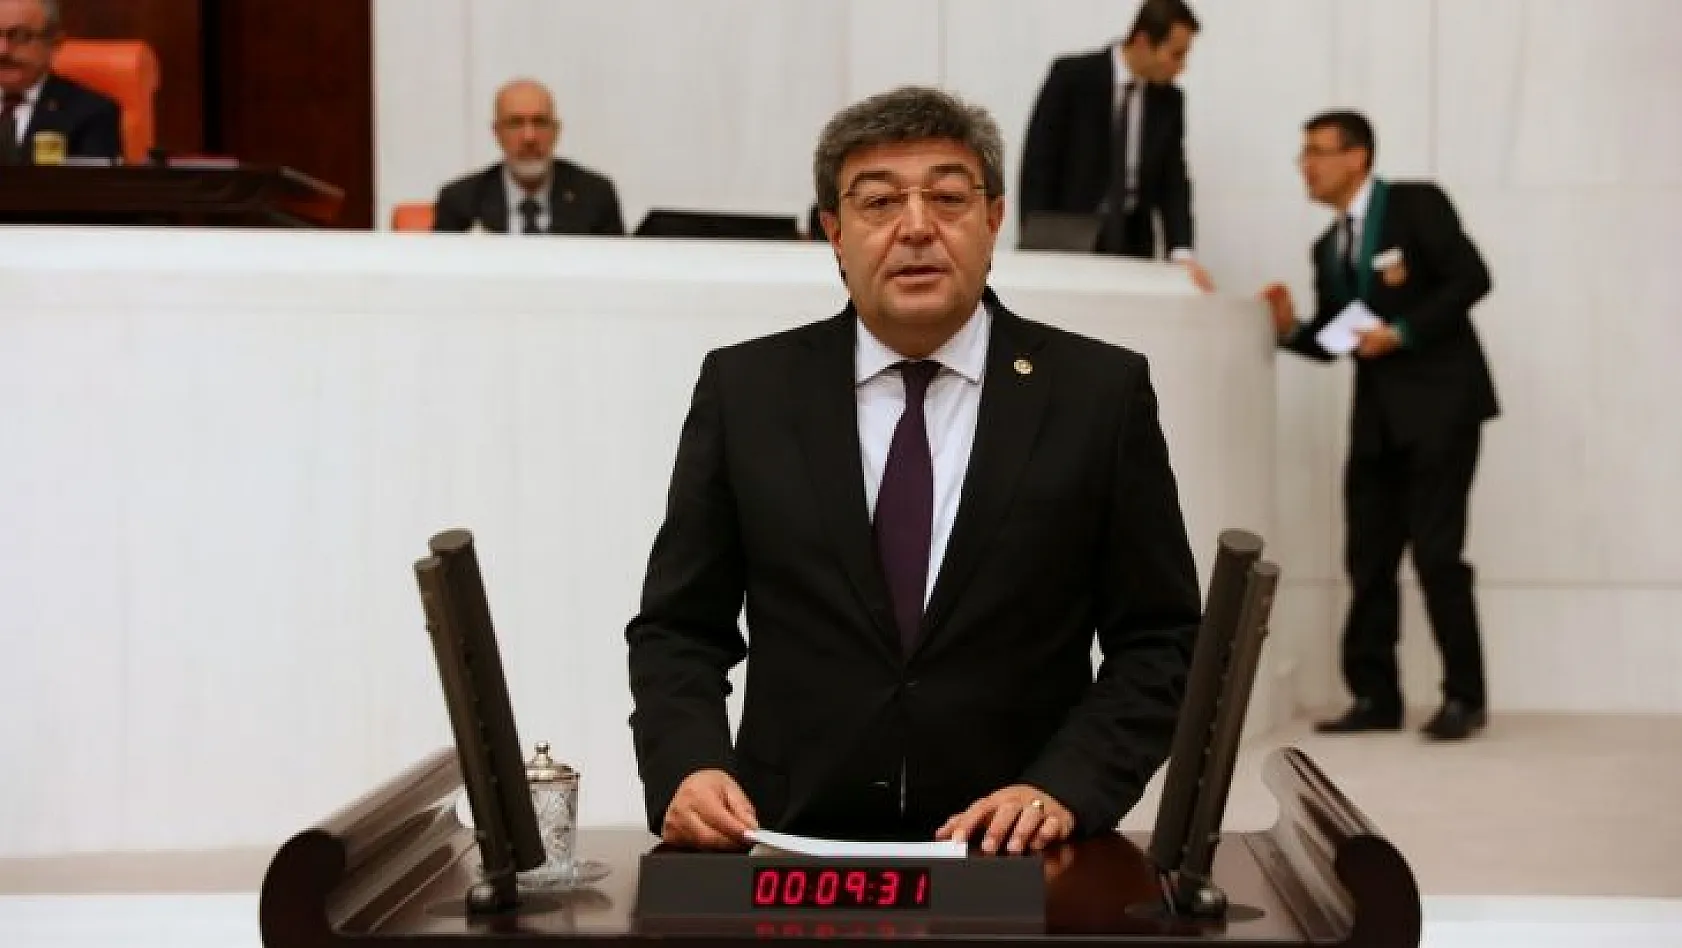 Milletvekili Ataş, Kayseri'deki esnaf eylemini Meclis'e taşıdı...